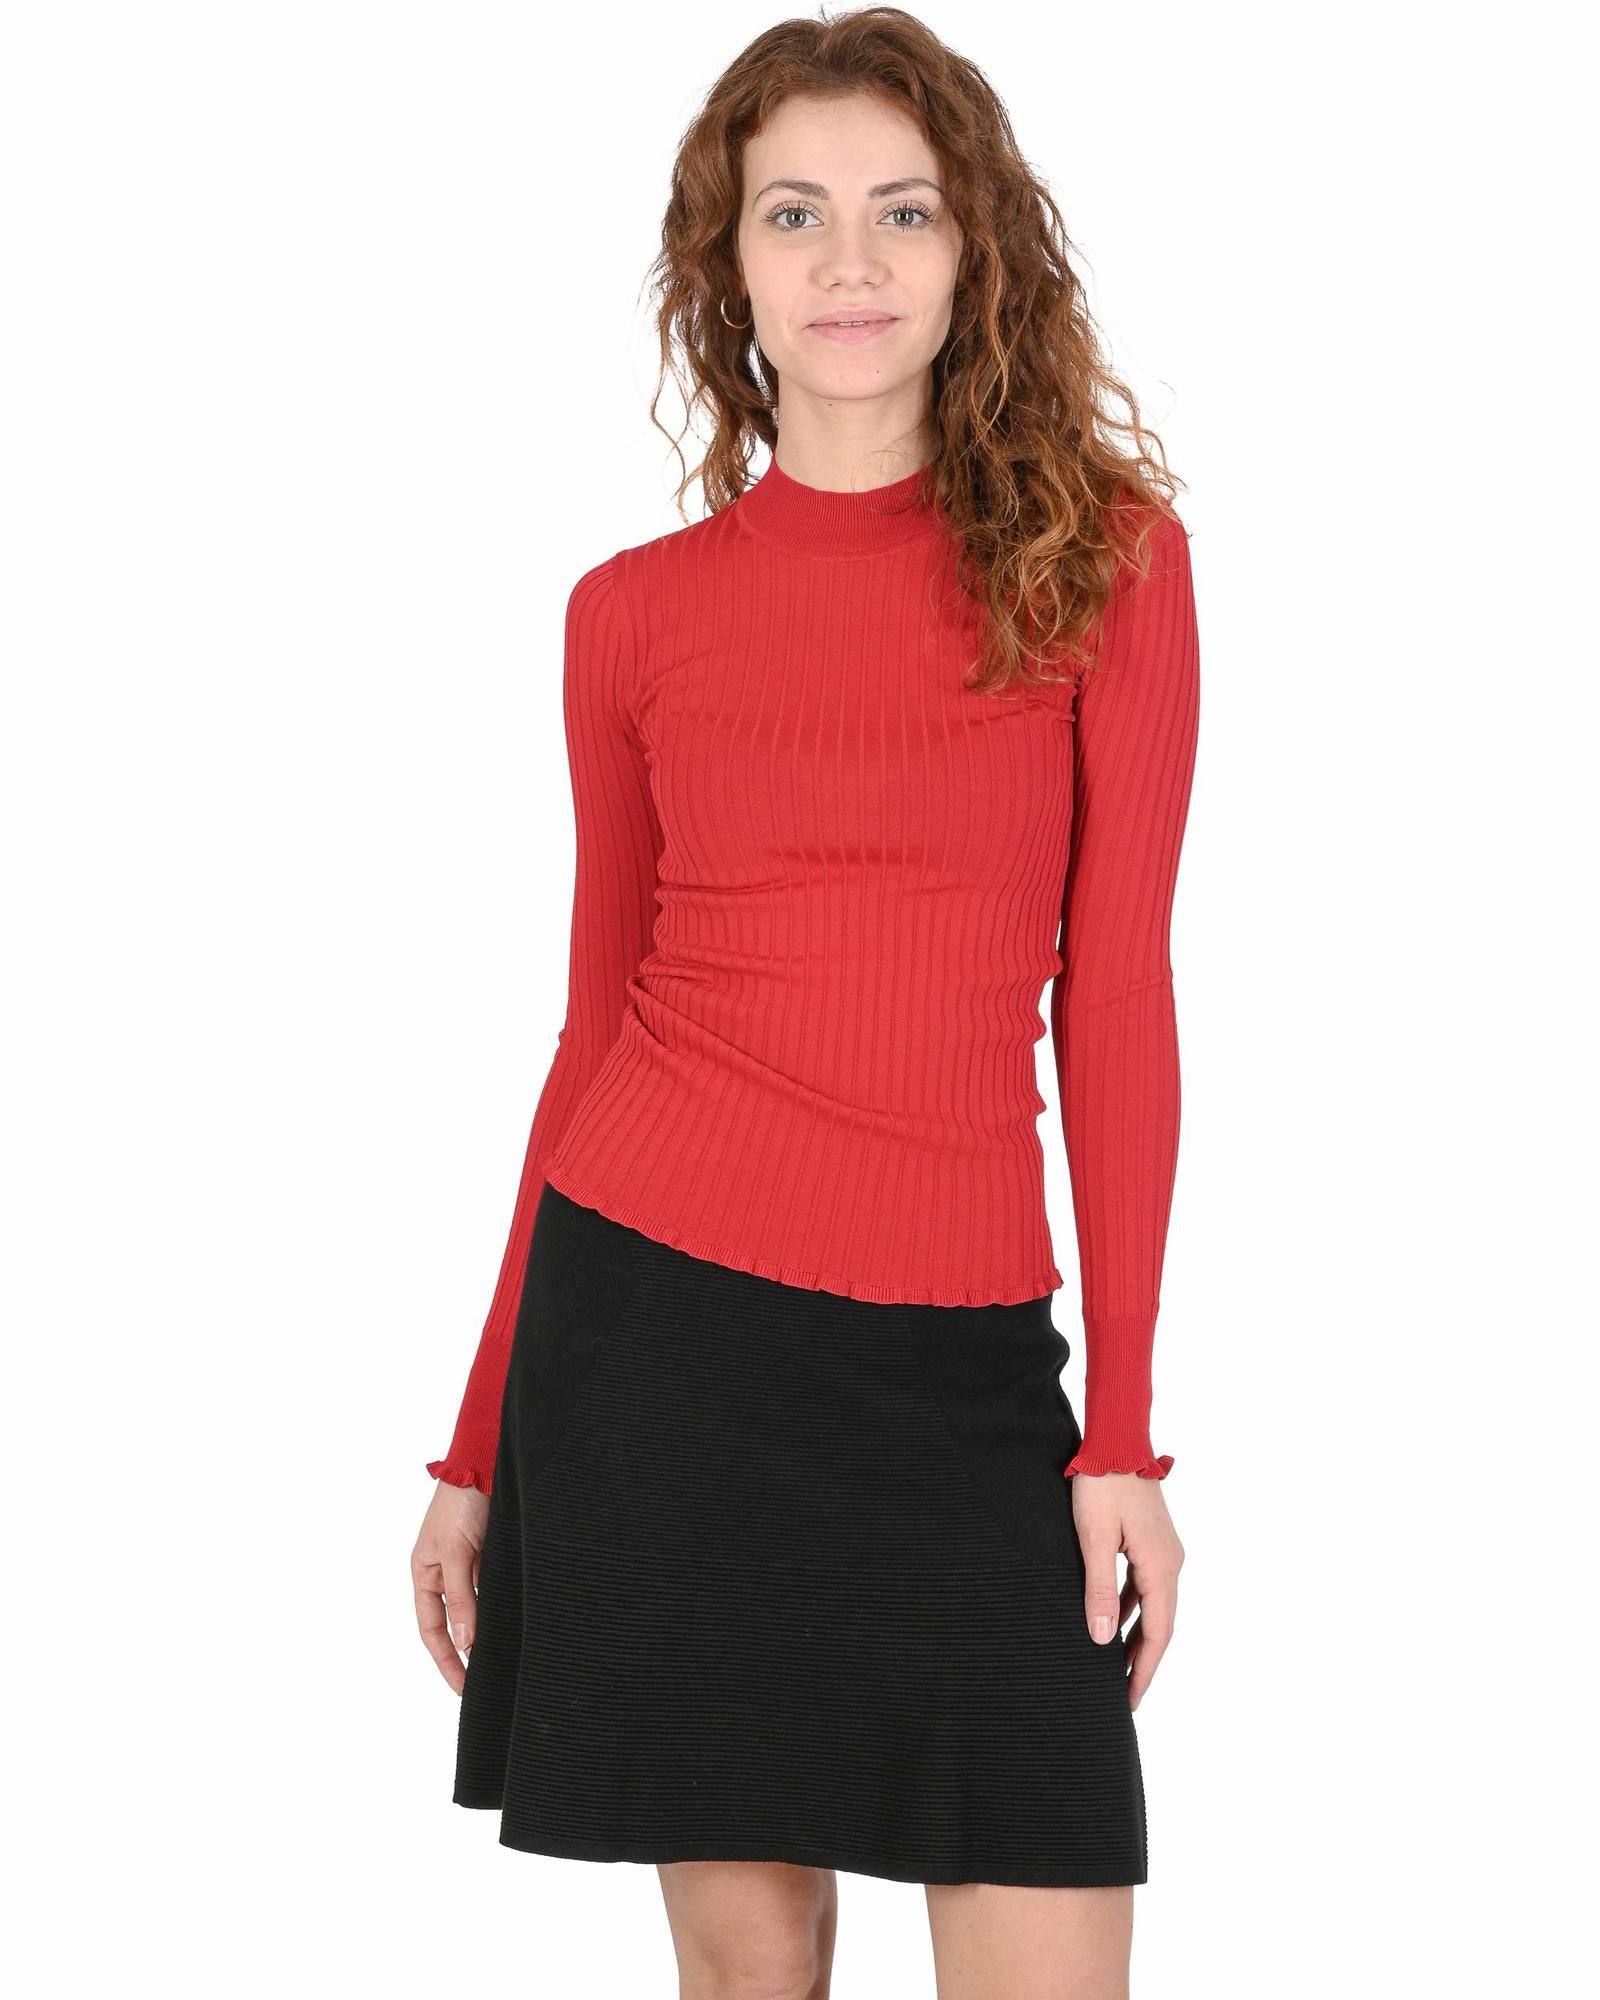 Hugo Boss Women's Red Viscose Blend Sweater in Red - M